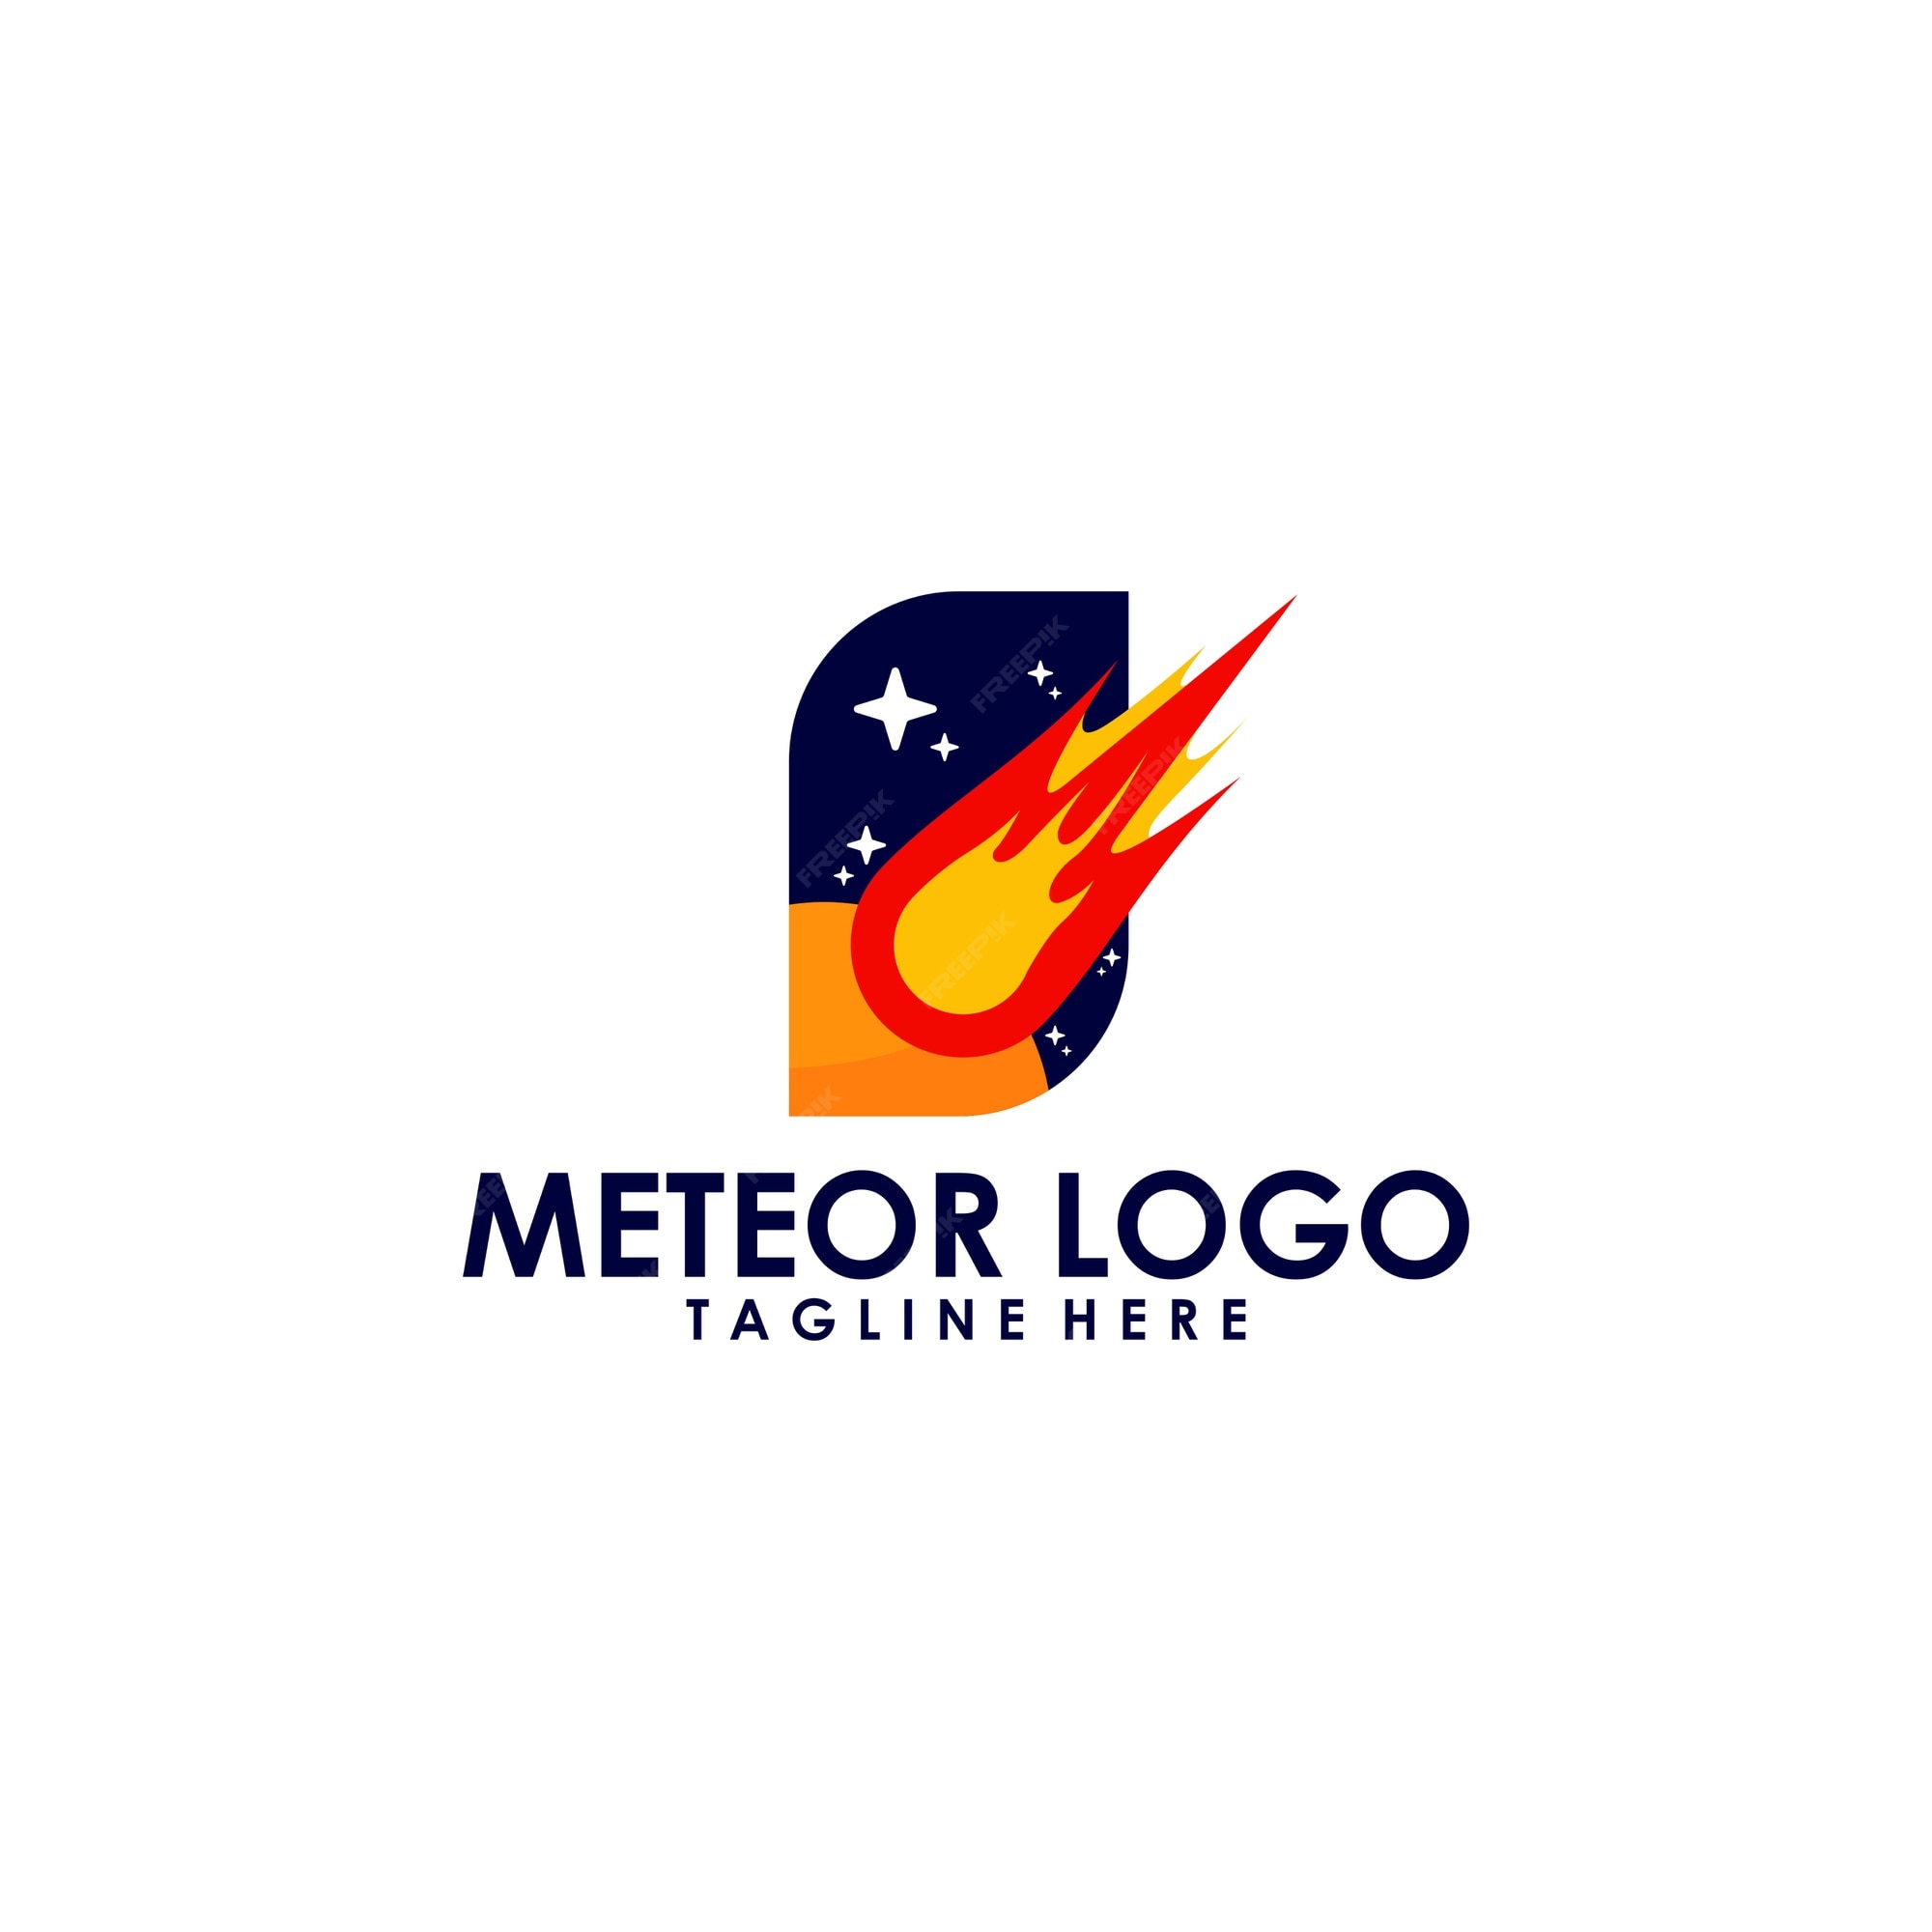 Premium Vector | Meteor logo